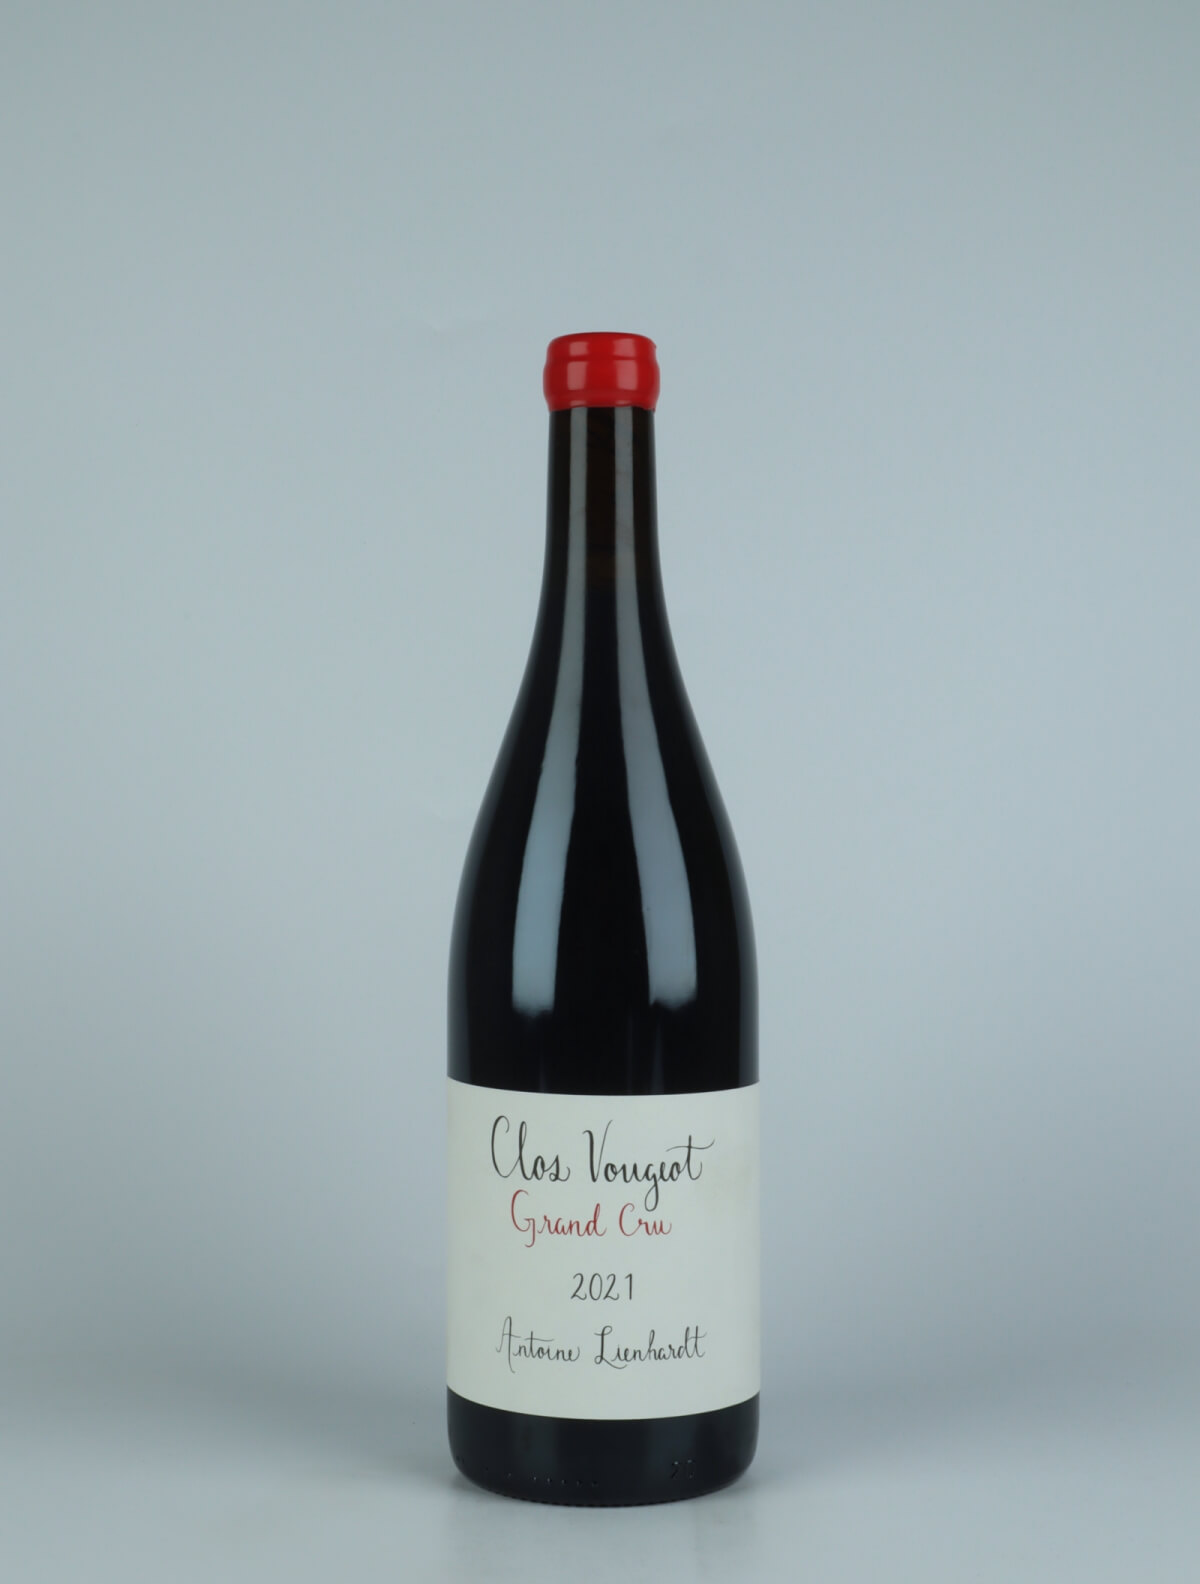 A bottle 2021 Clos de Vougeot - Grand Cru Red wine from Antoine Lienhardt, Burgundy in France